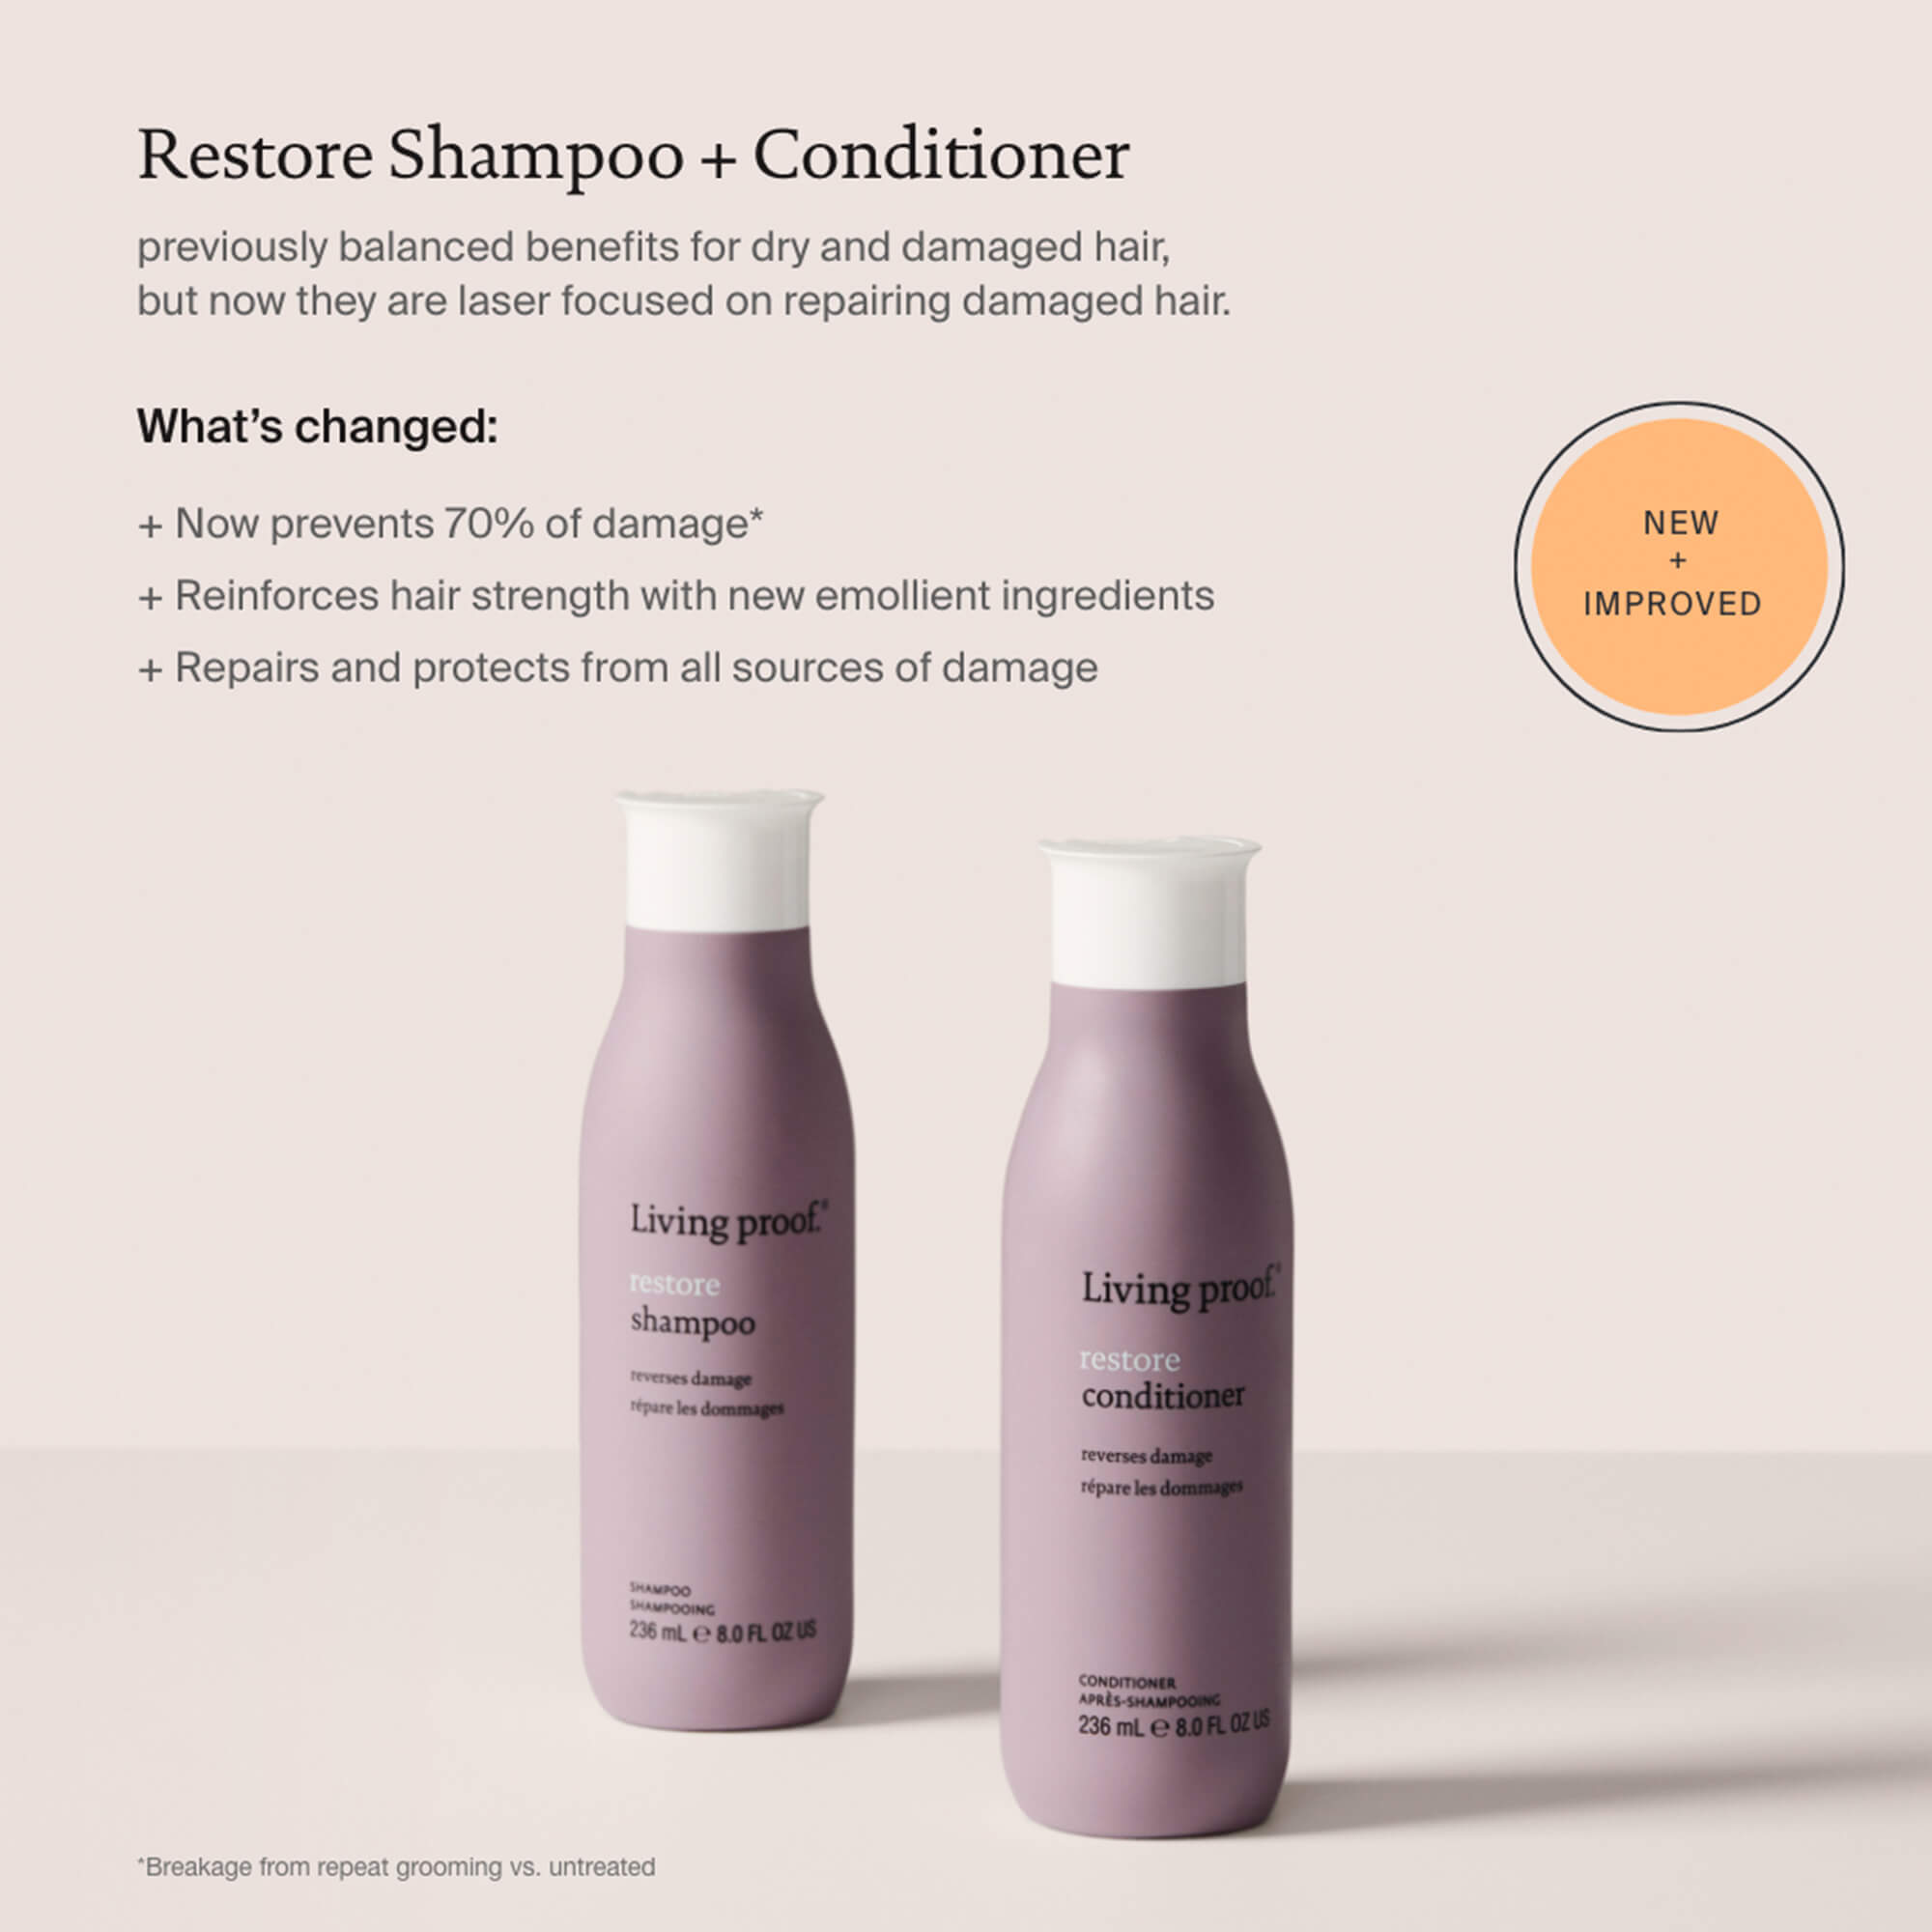 Restore Shampoo